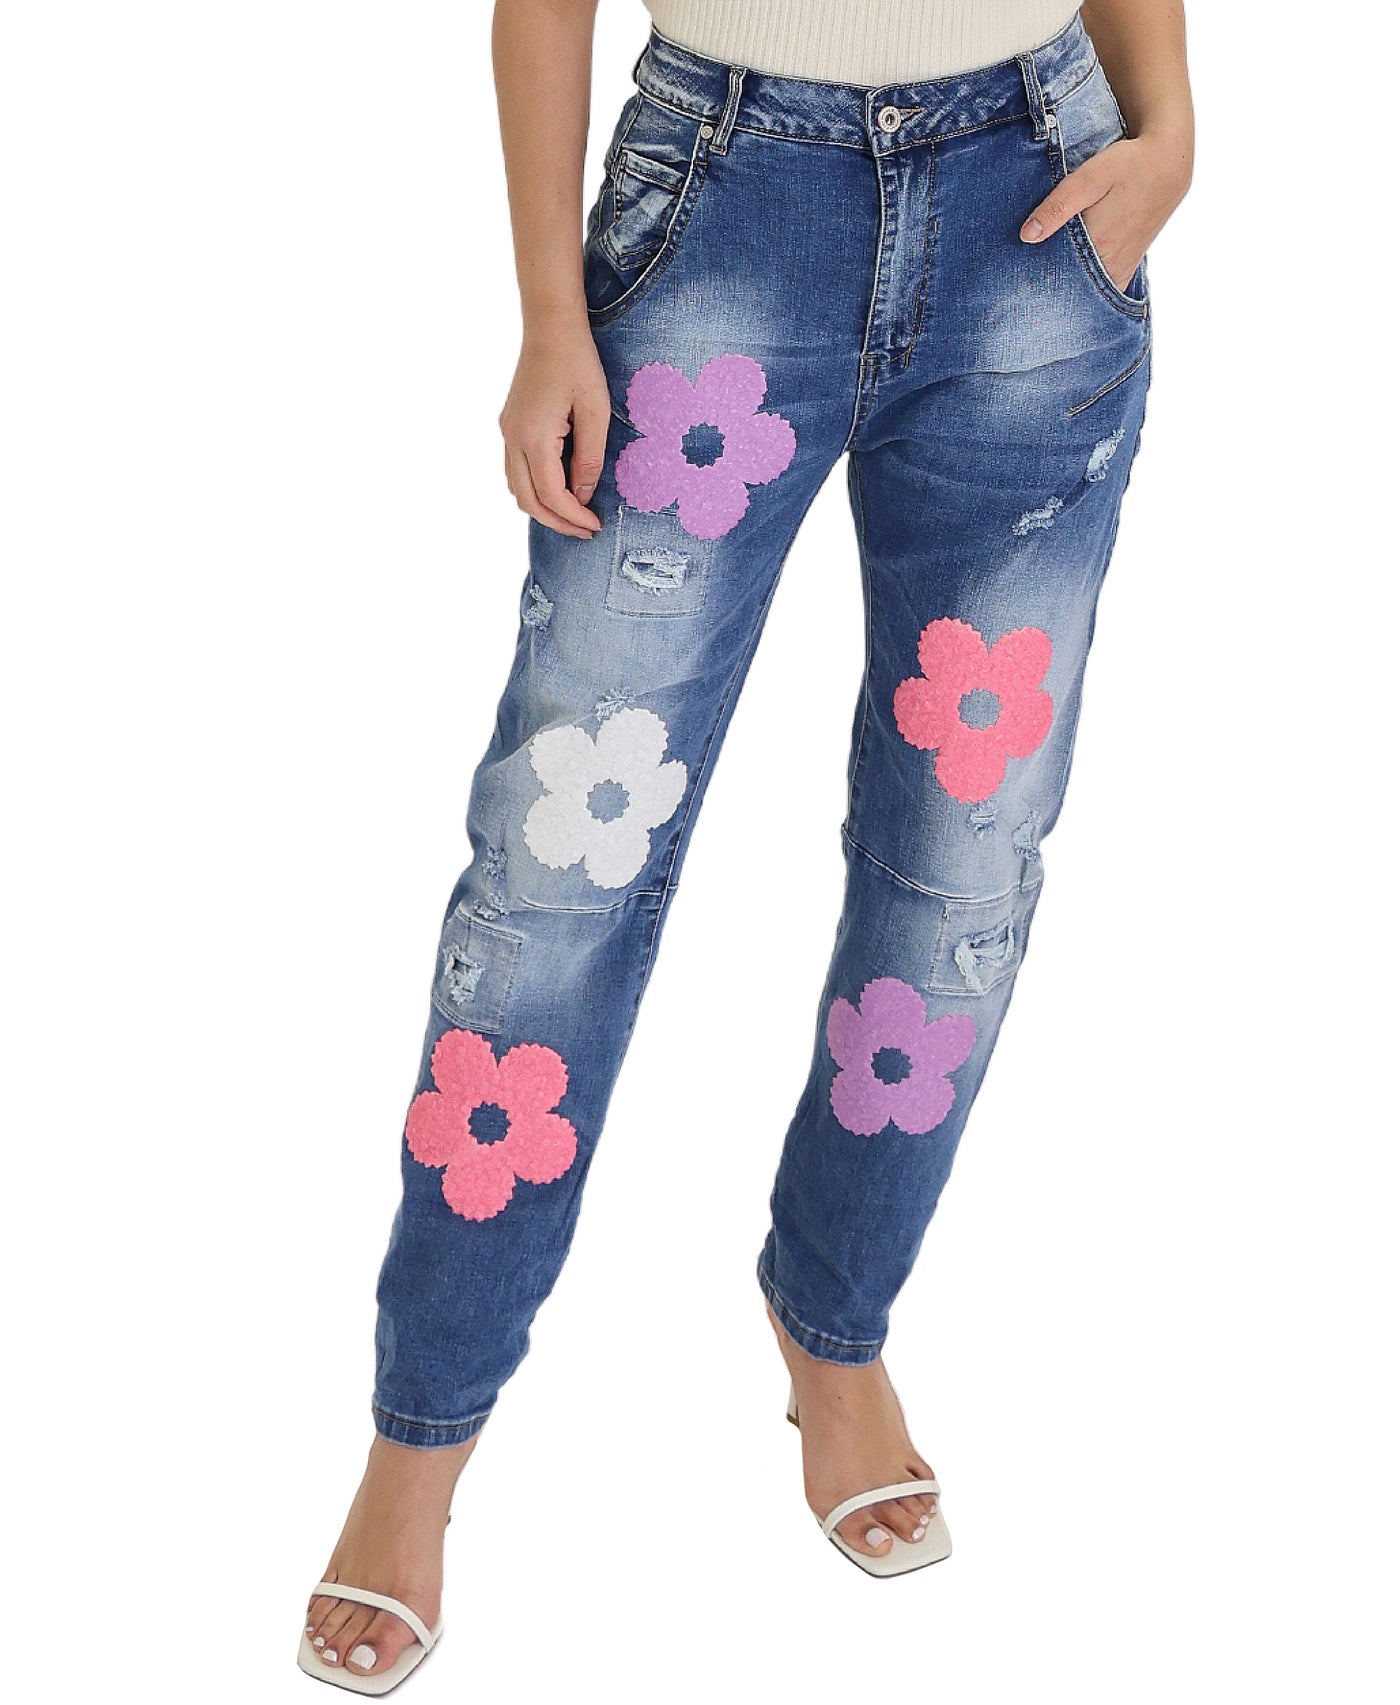 Jeans w/ Flower Detail image 1